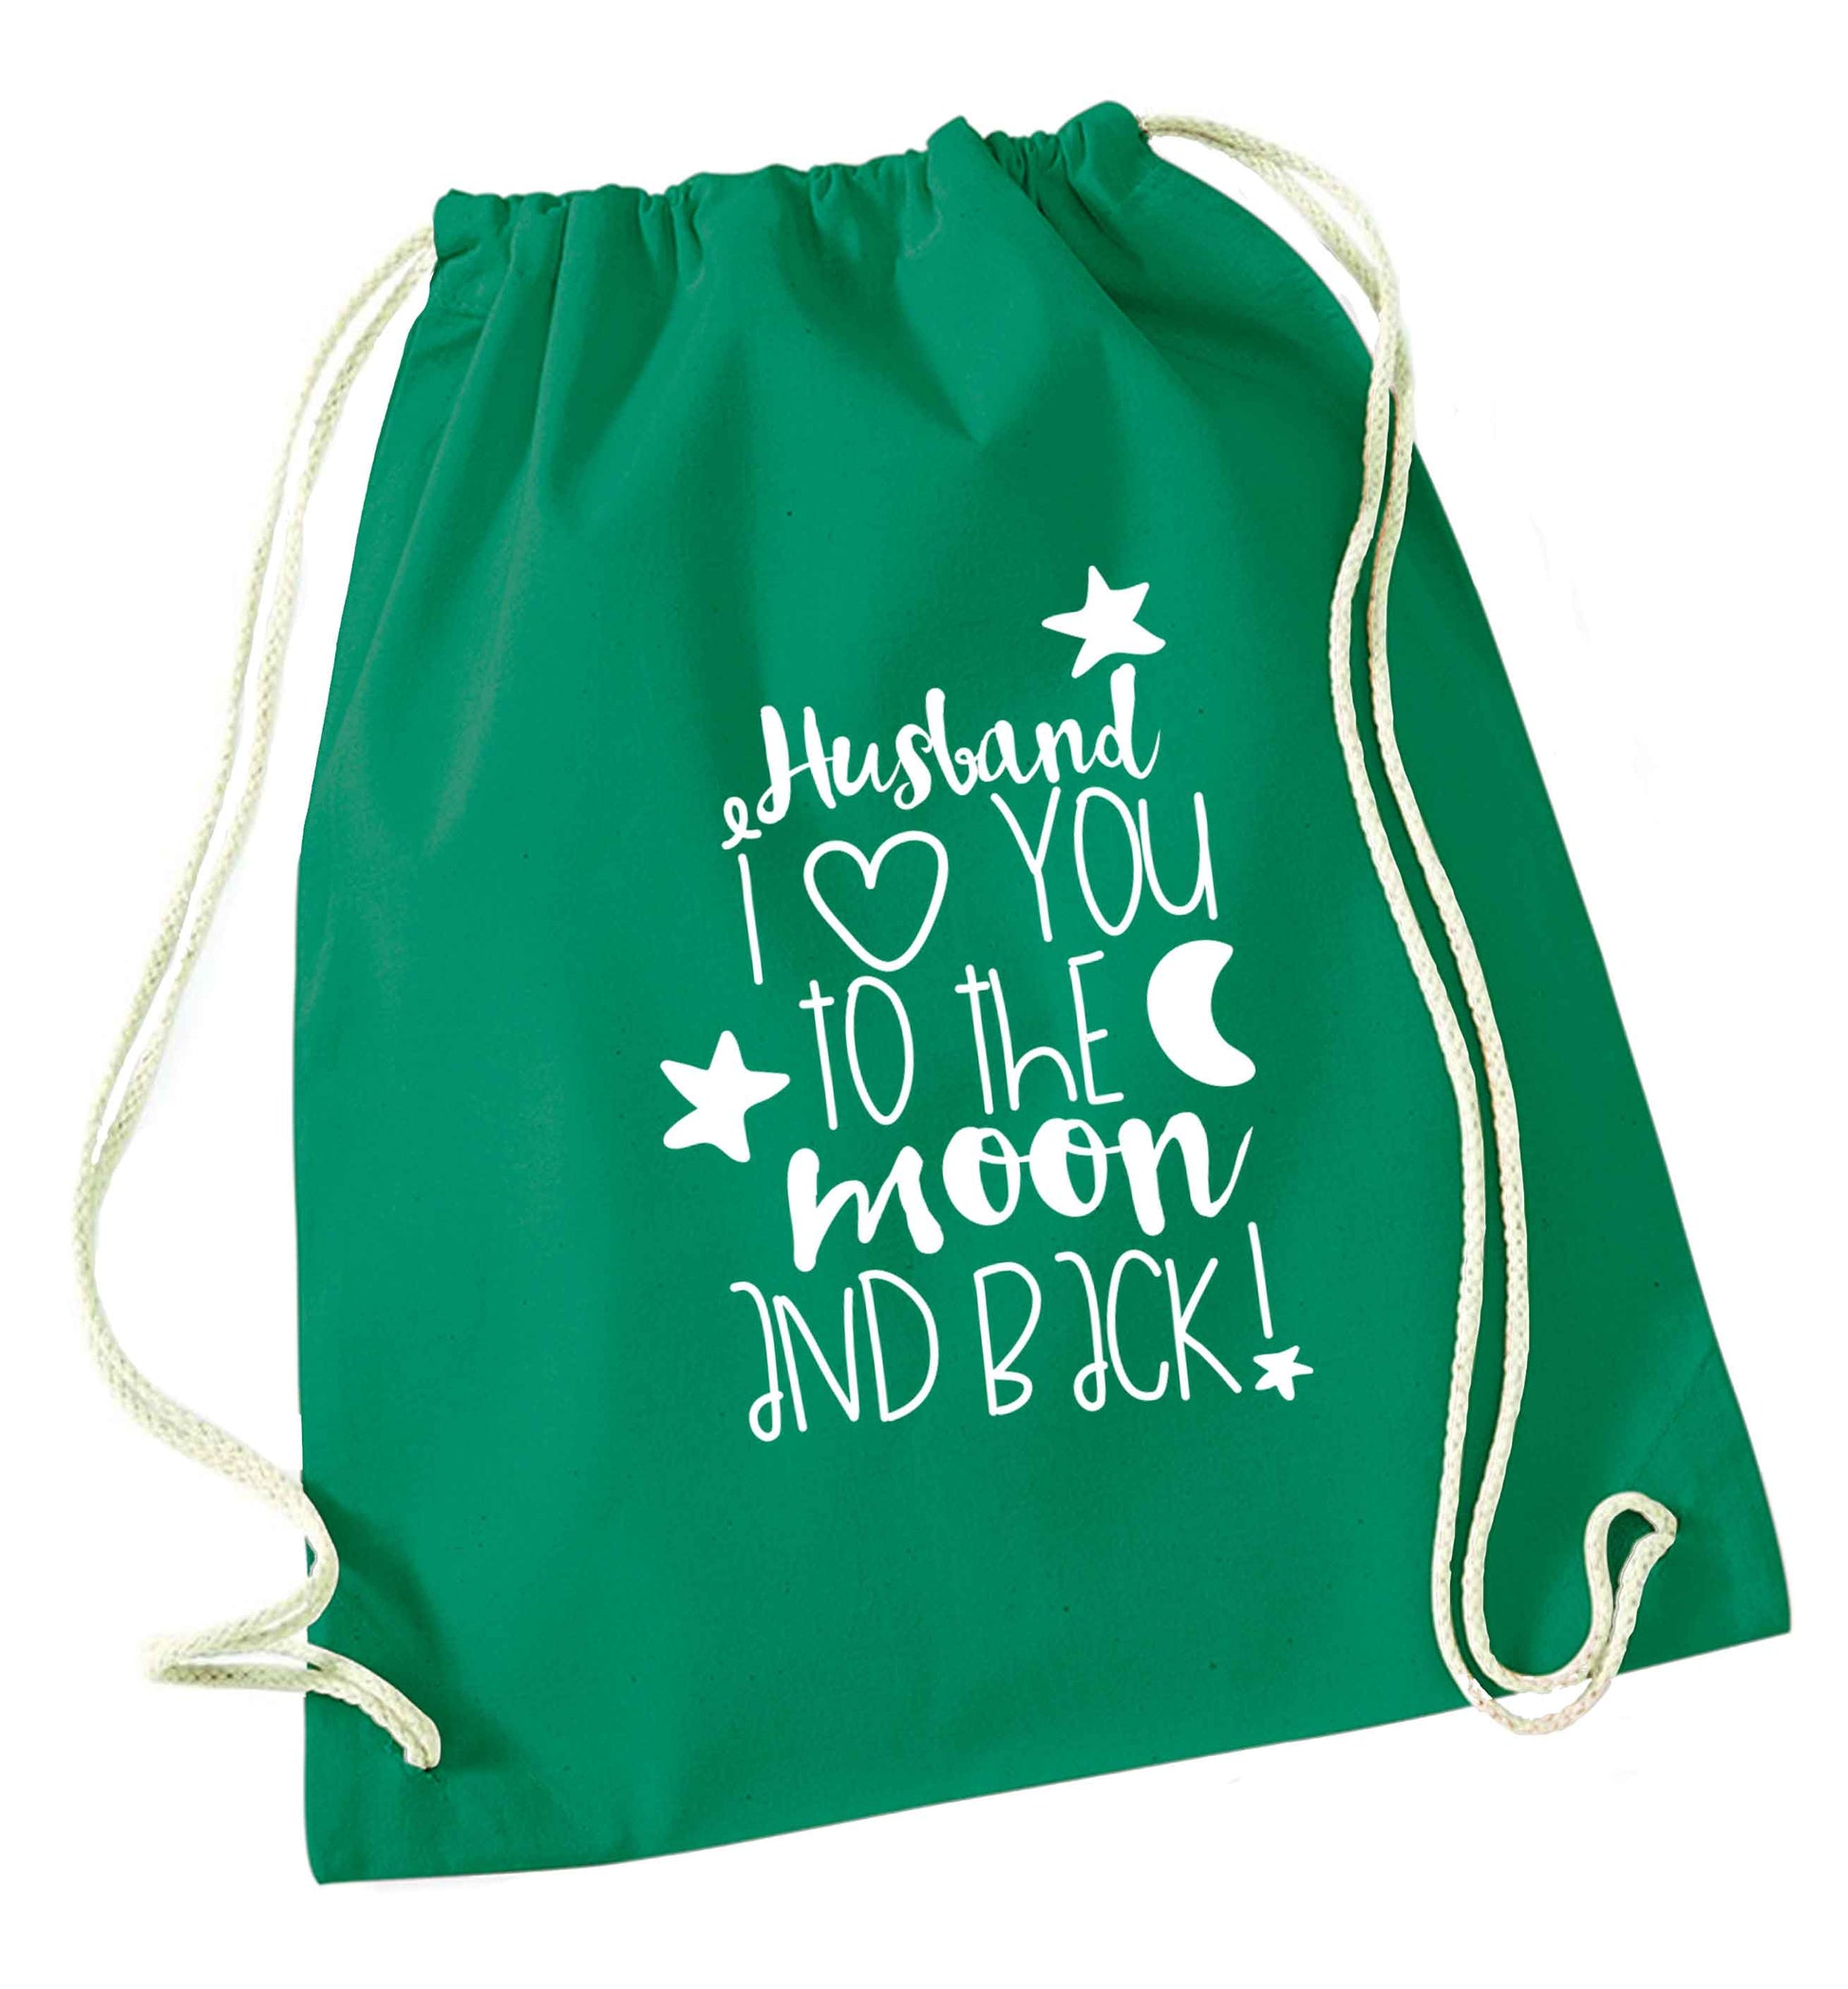 Husband I love you to the moon and back green drawstring bag